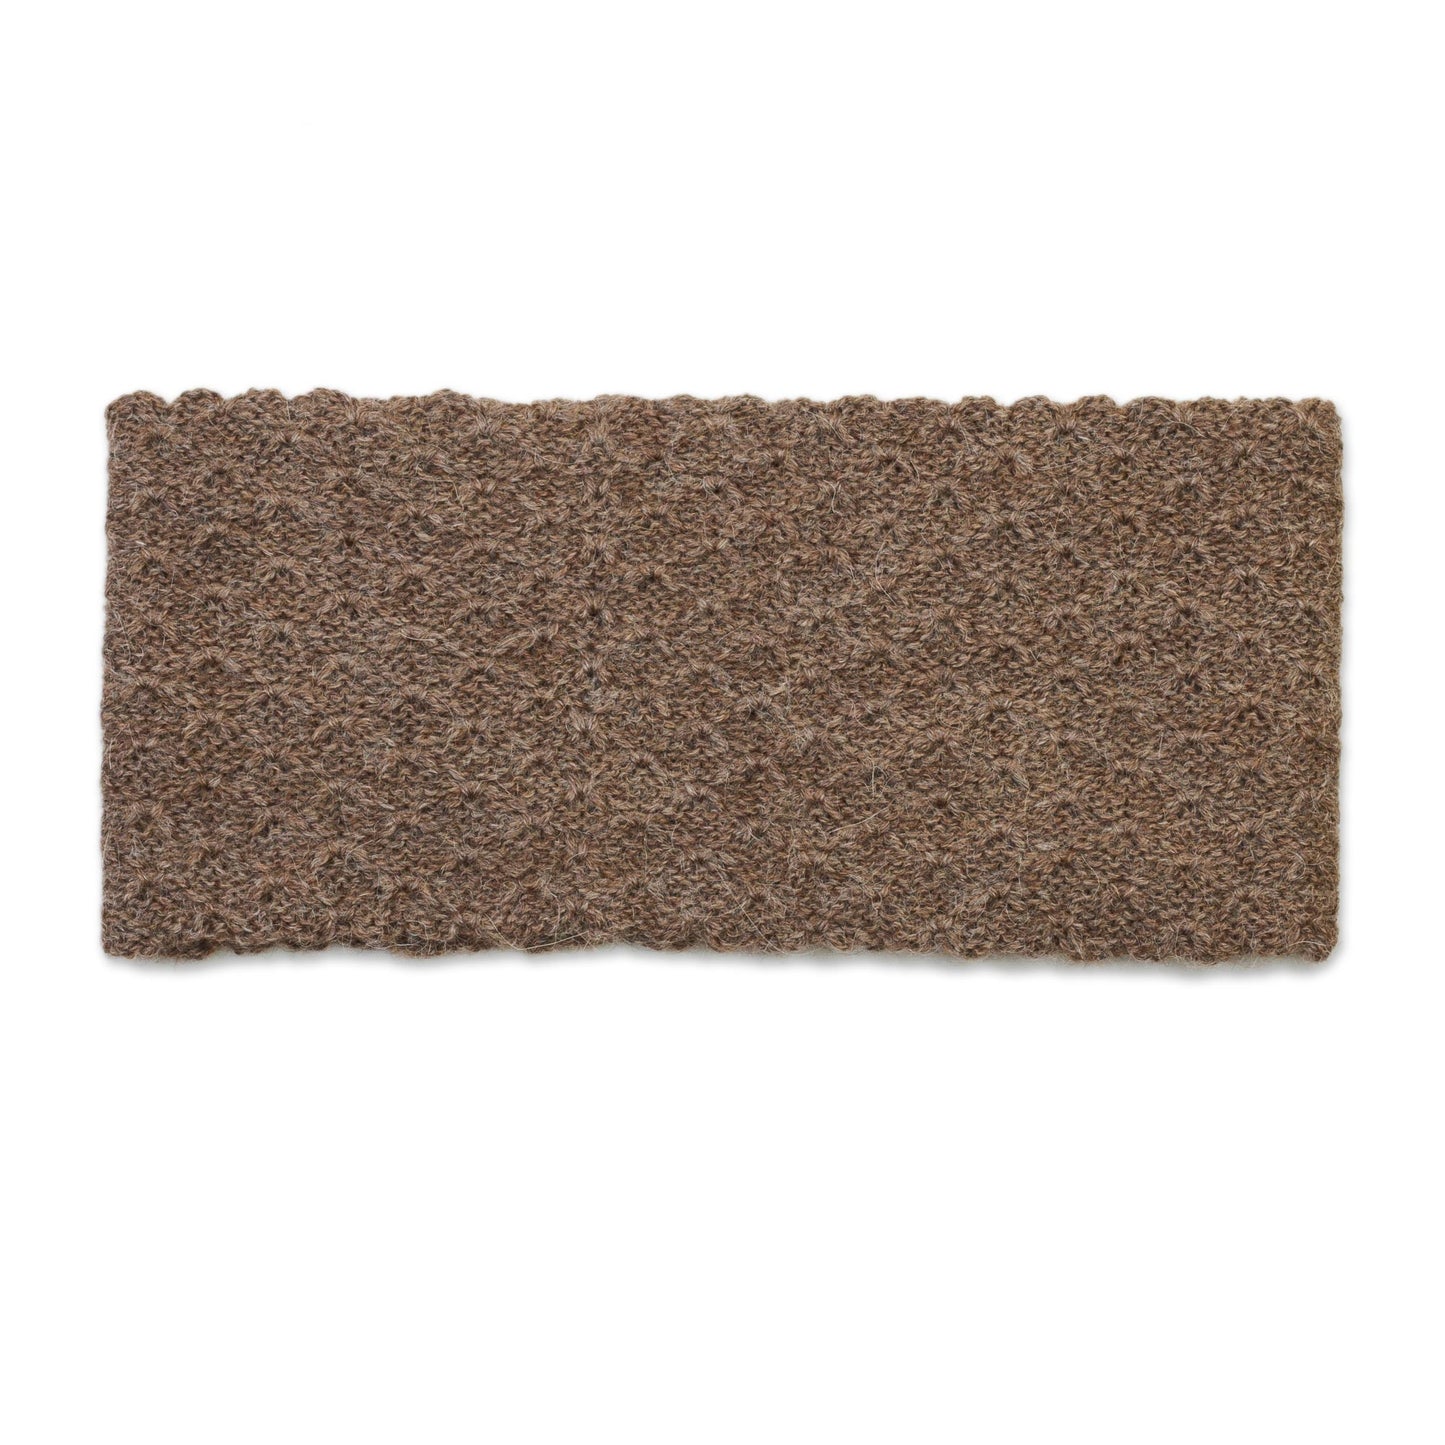 Wavelength in Chestnut Chestnut 100% Baby Alpaca Honeycomb Pattern Knit Headband